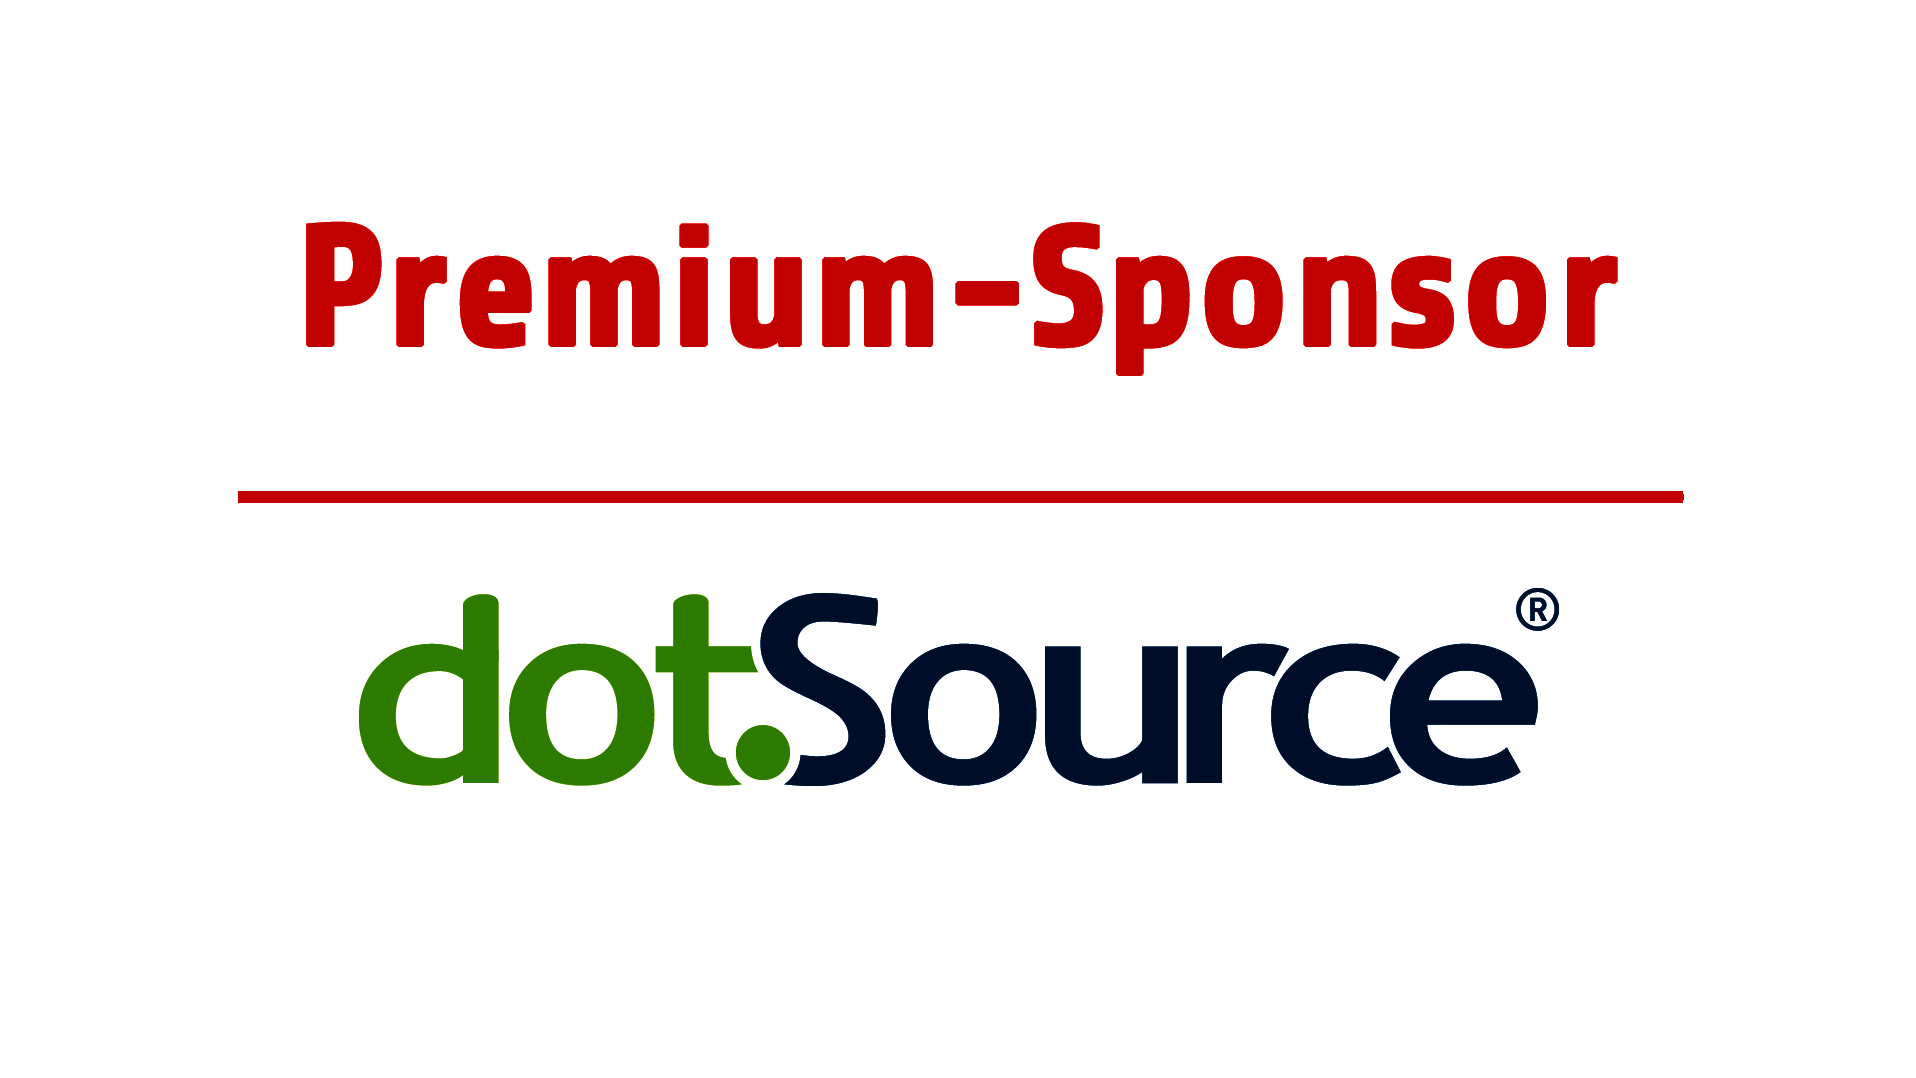 Premiumsponsor dot.source